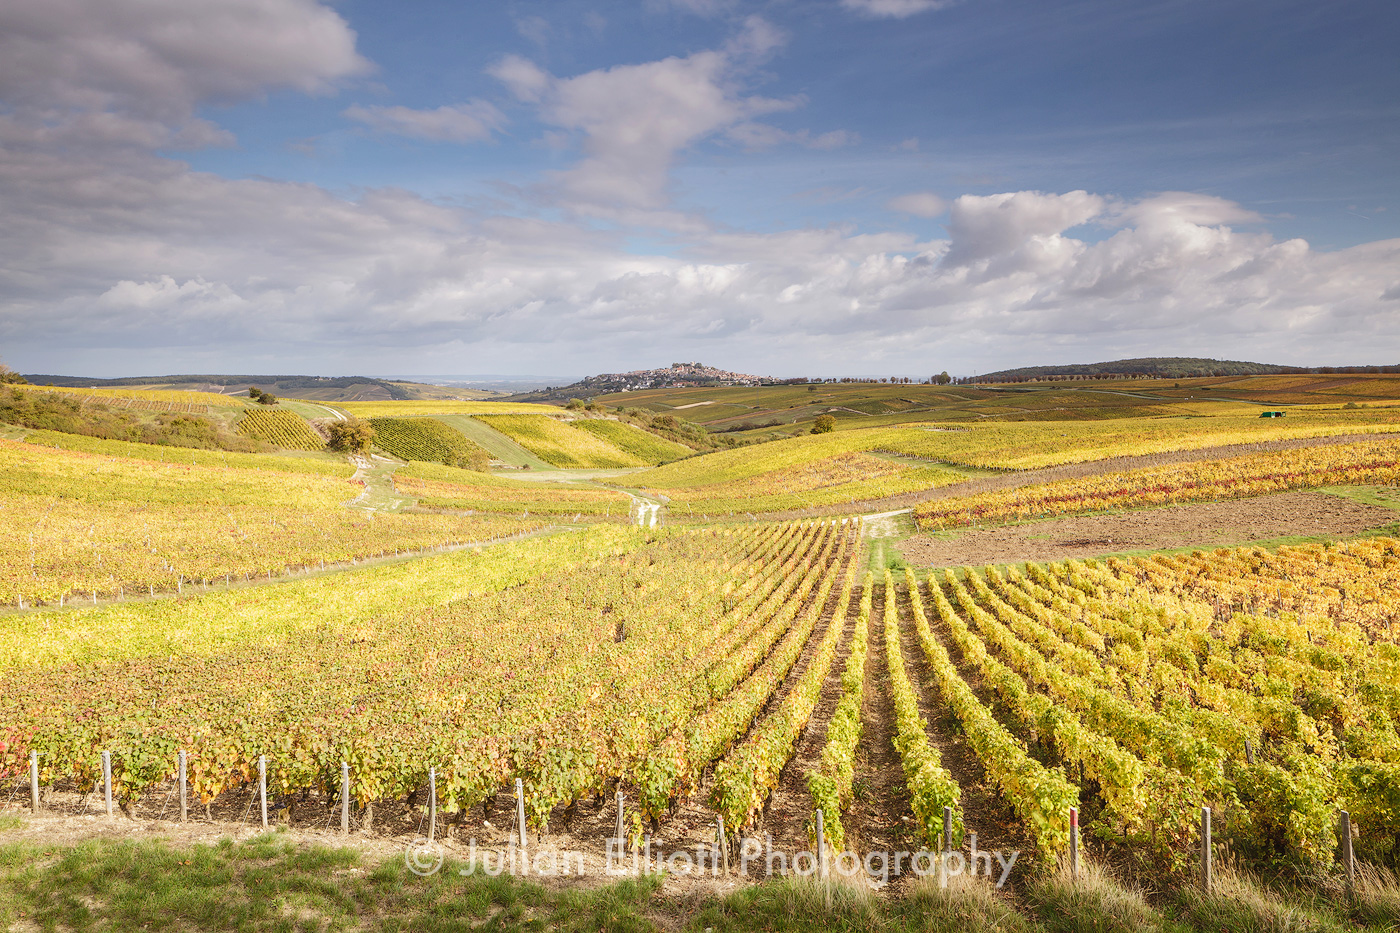 Autumn color in the vineyards of Sancerre, France.